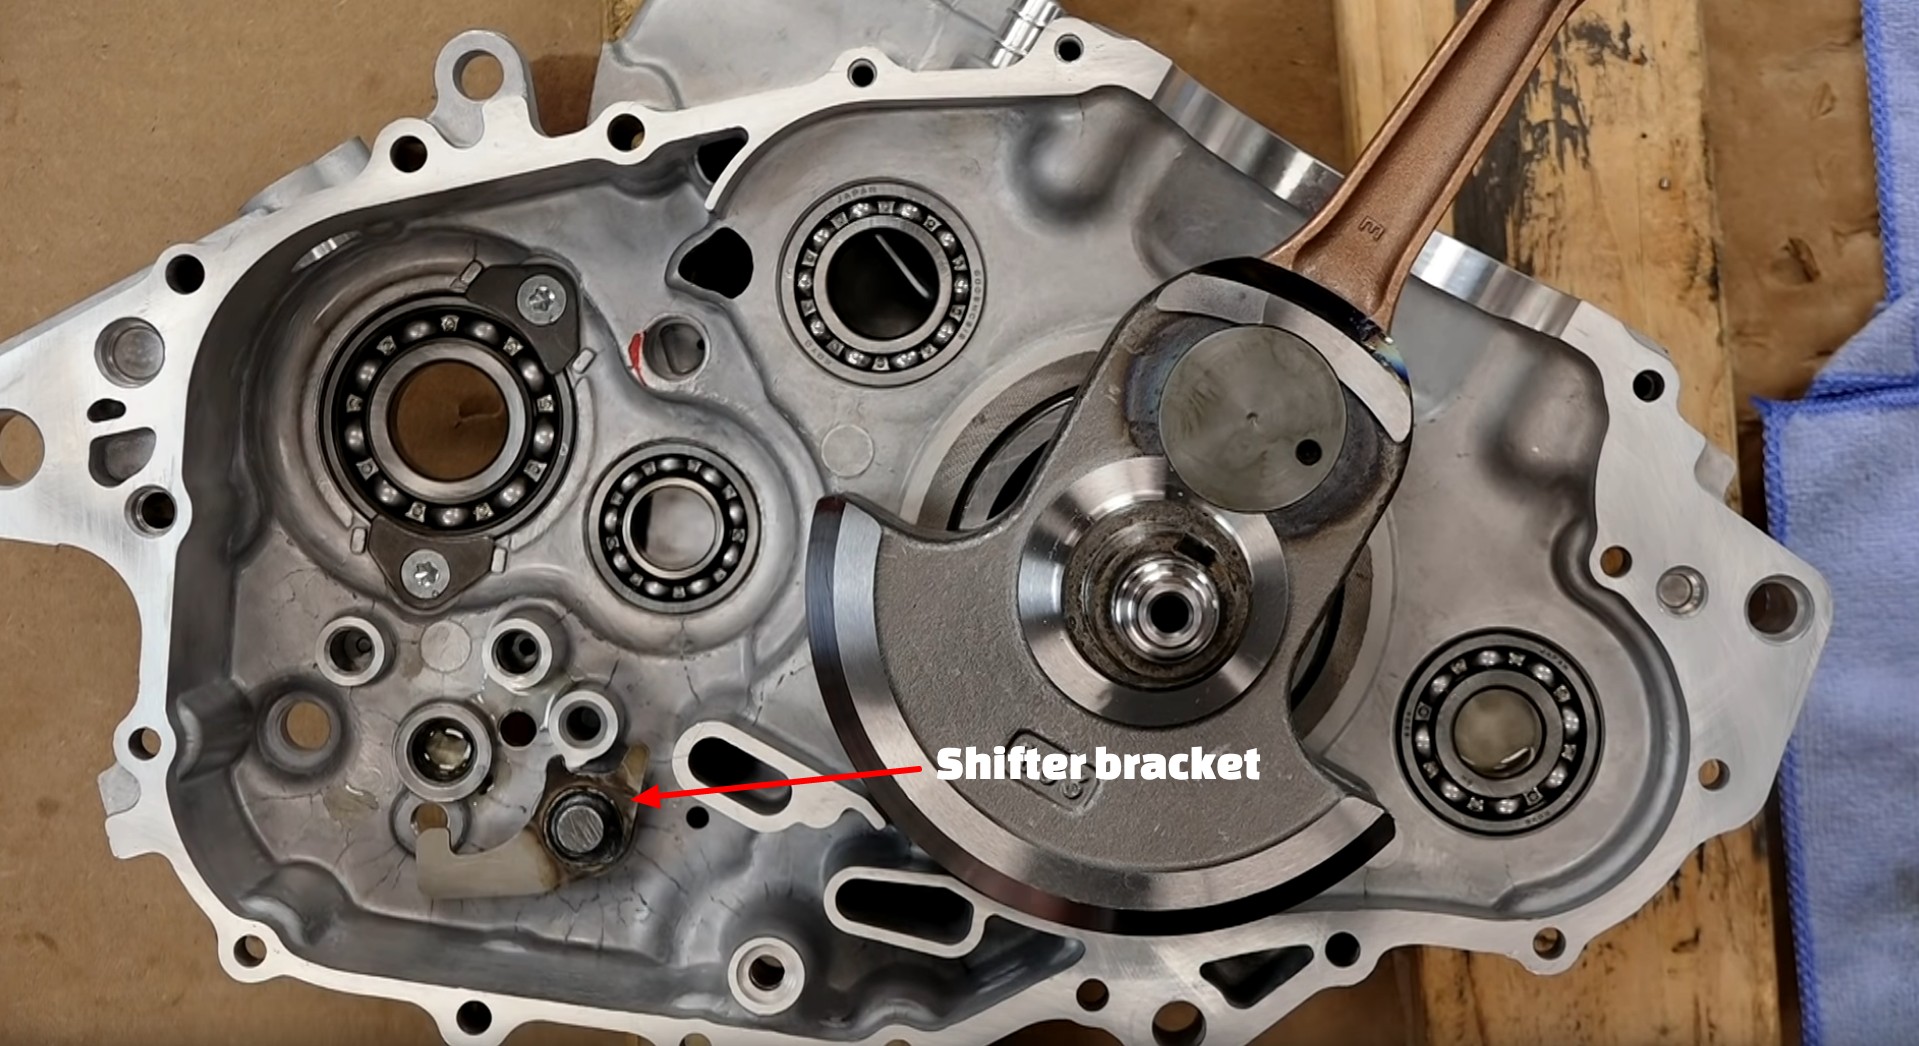 Yamaha Raptor engine shifter bracket assembly